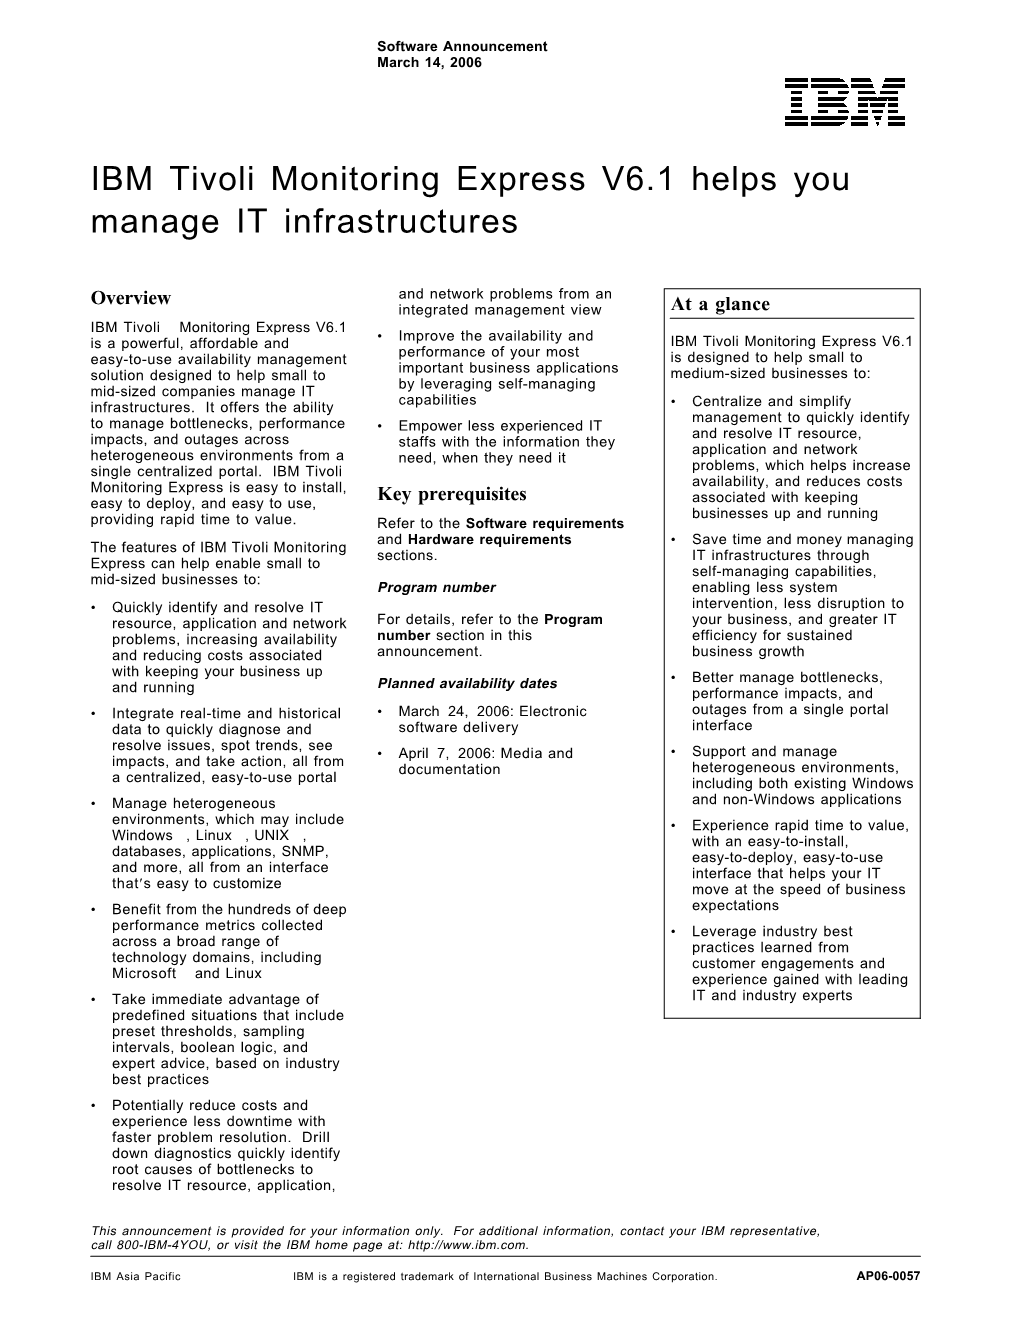 IBM Tivoli Monitoring Express V6.1 Helps You Manage IT Infrastructures